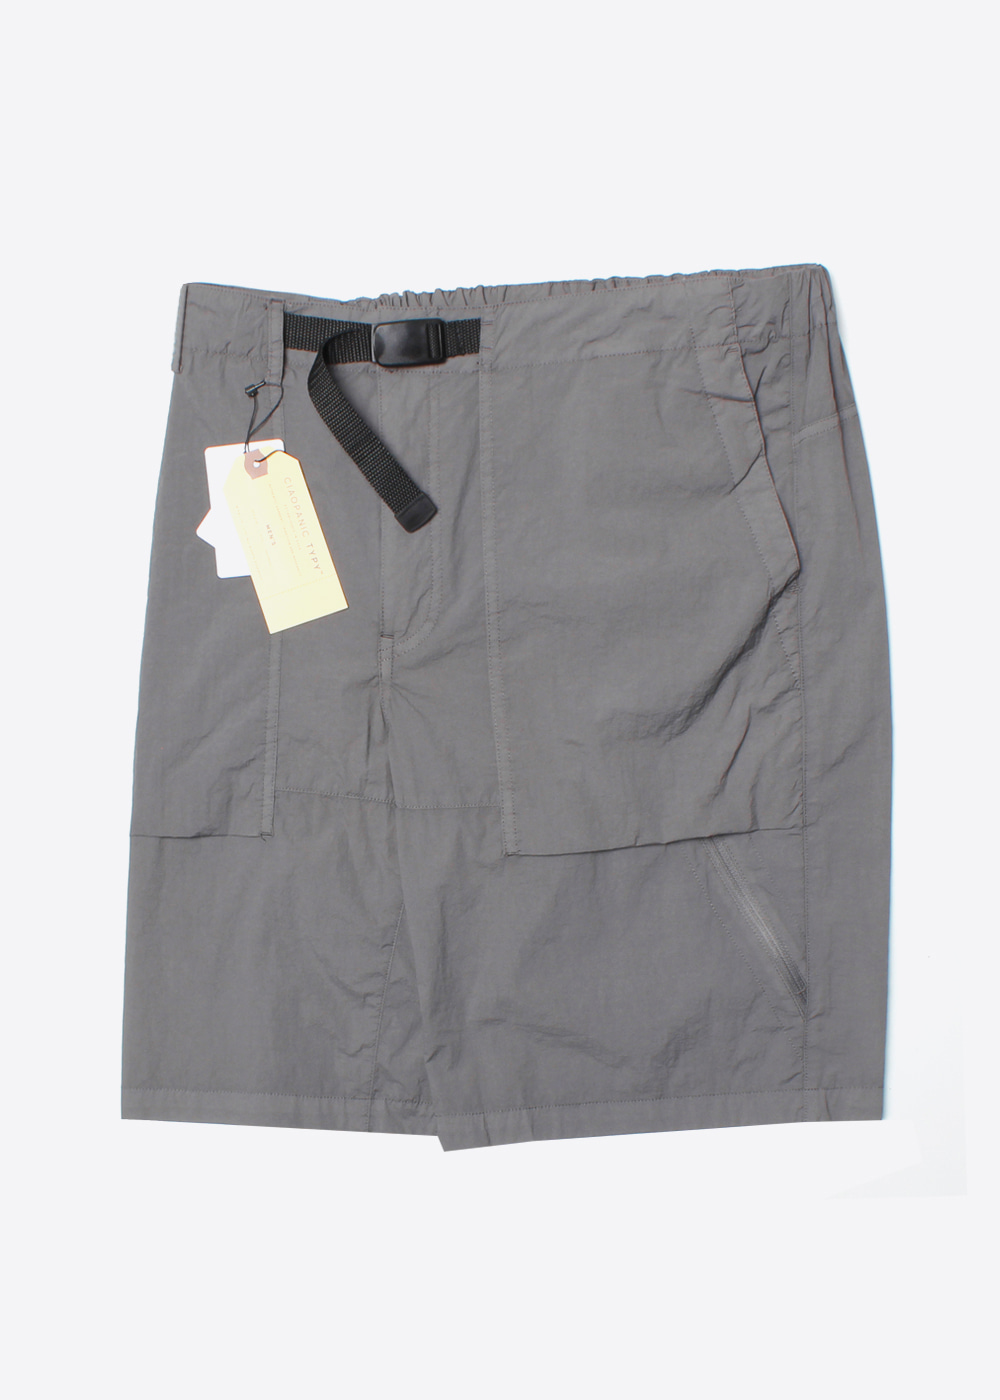 CIAOPANIC TYPY’over fit’nylon multi pocket shorts